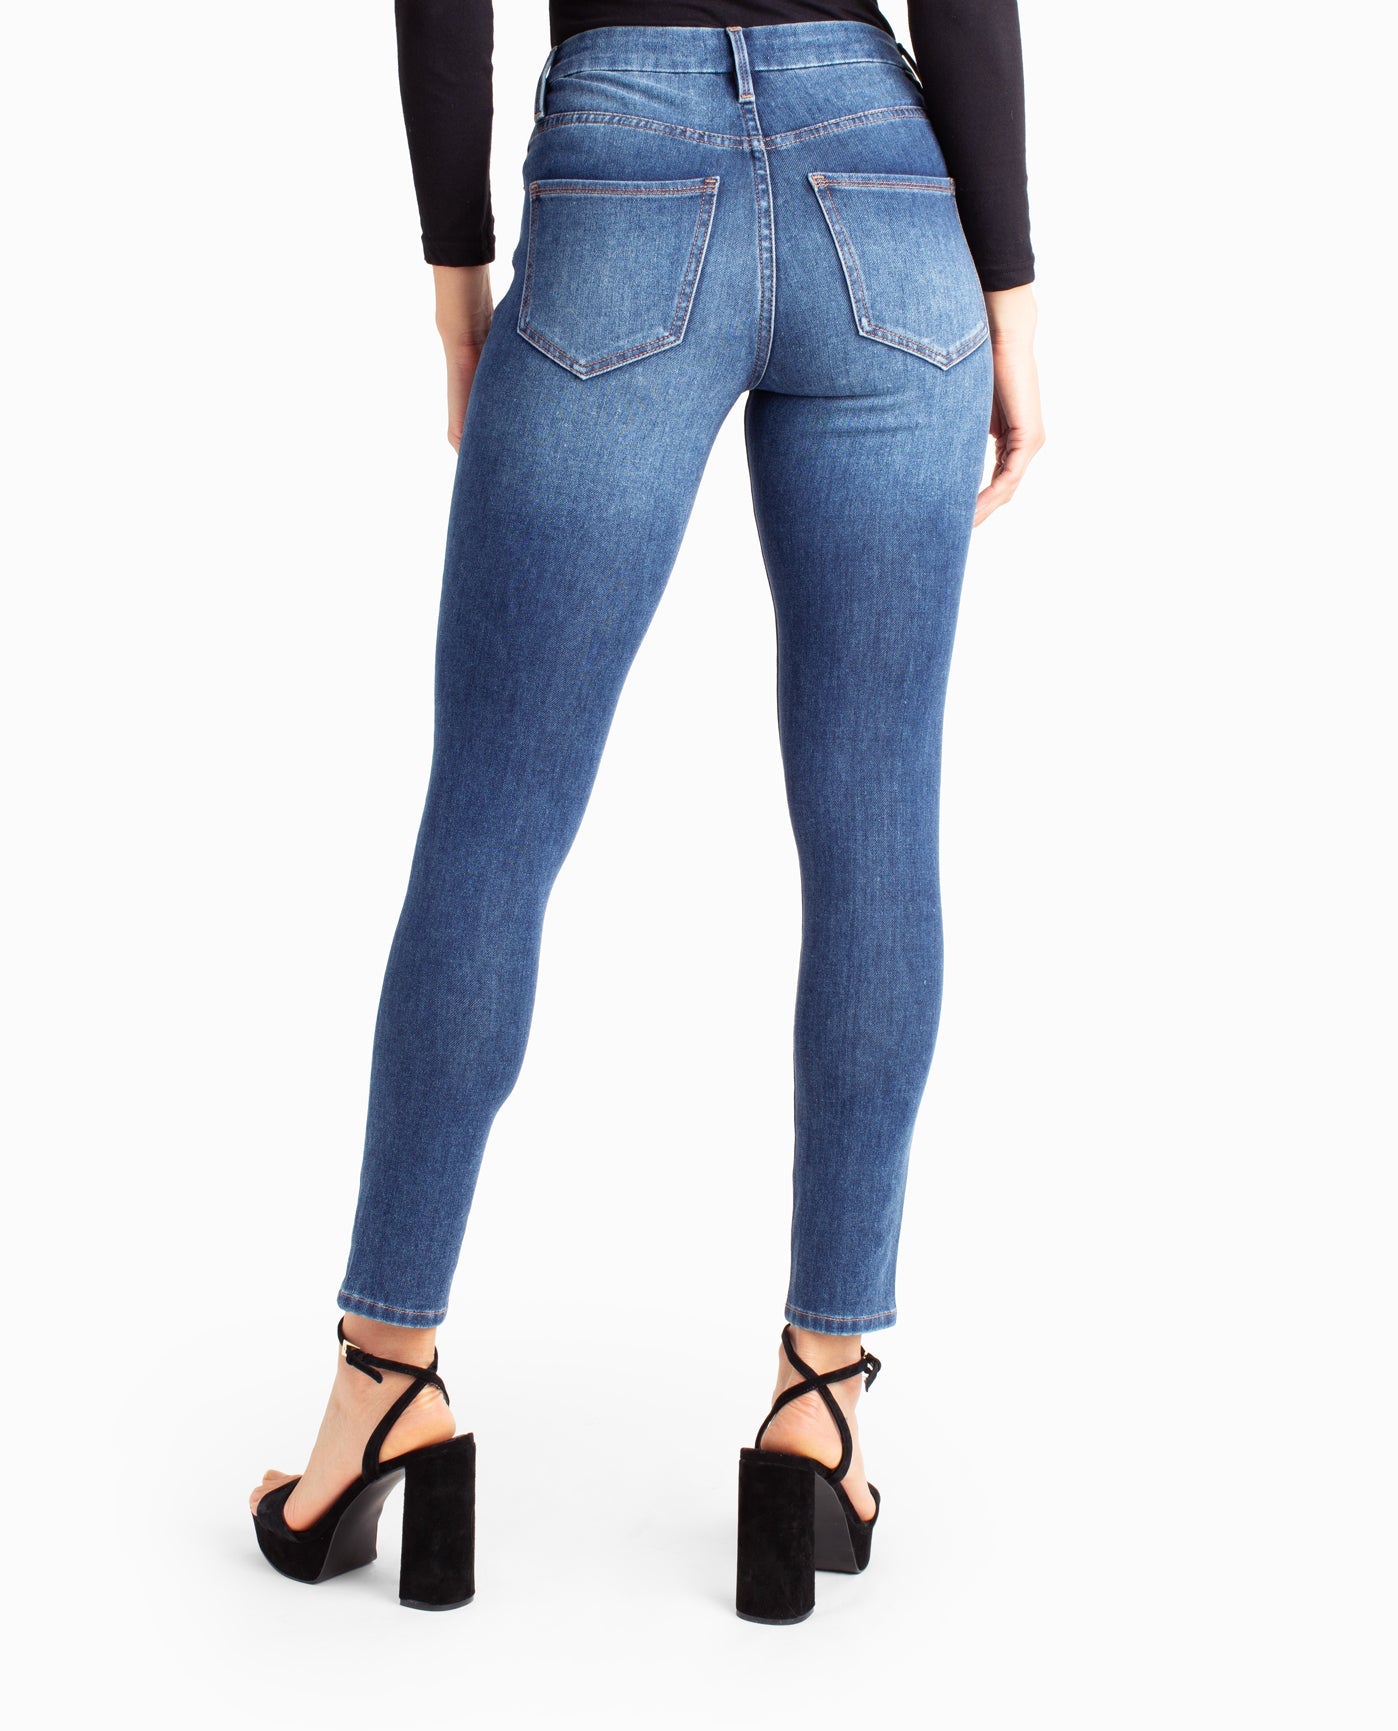 Buy Dark Blue High Rise Skinny Jeans For Women - ONLY